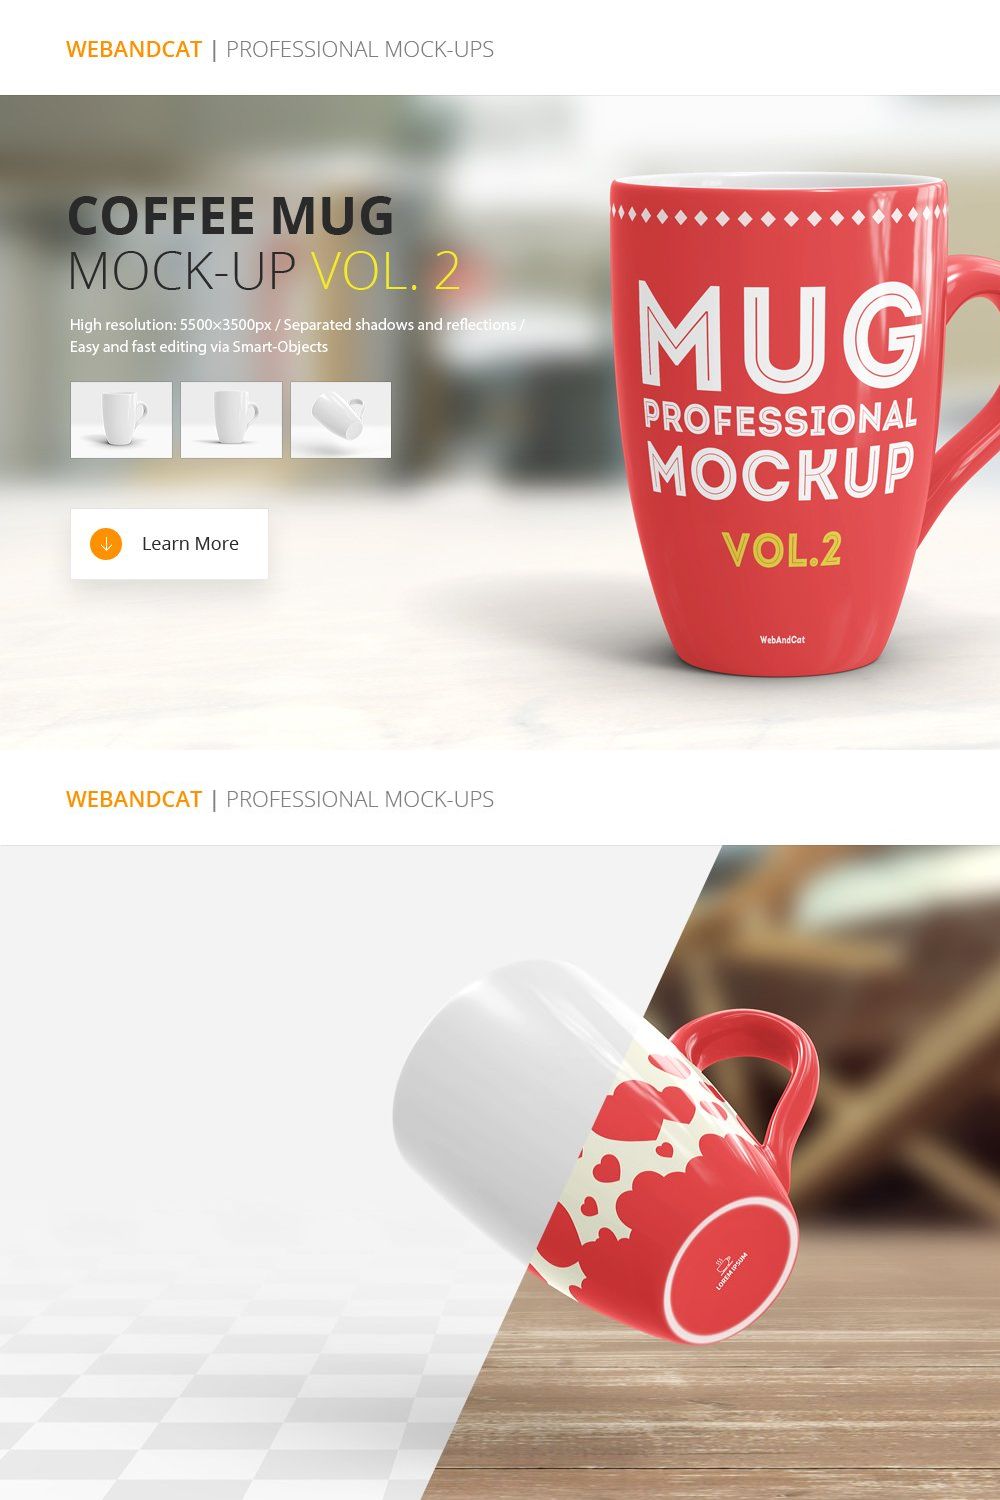 Coffee Mug Mockup vol.2 pinterest preview image.